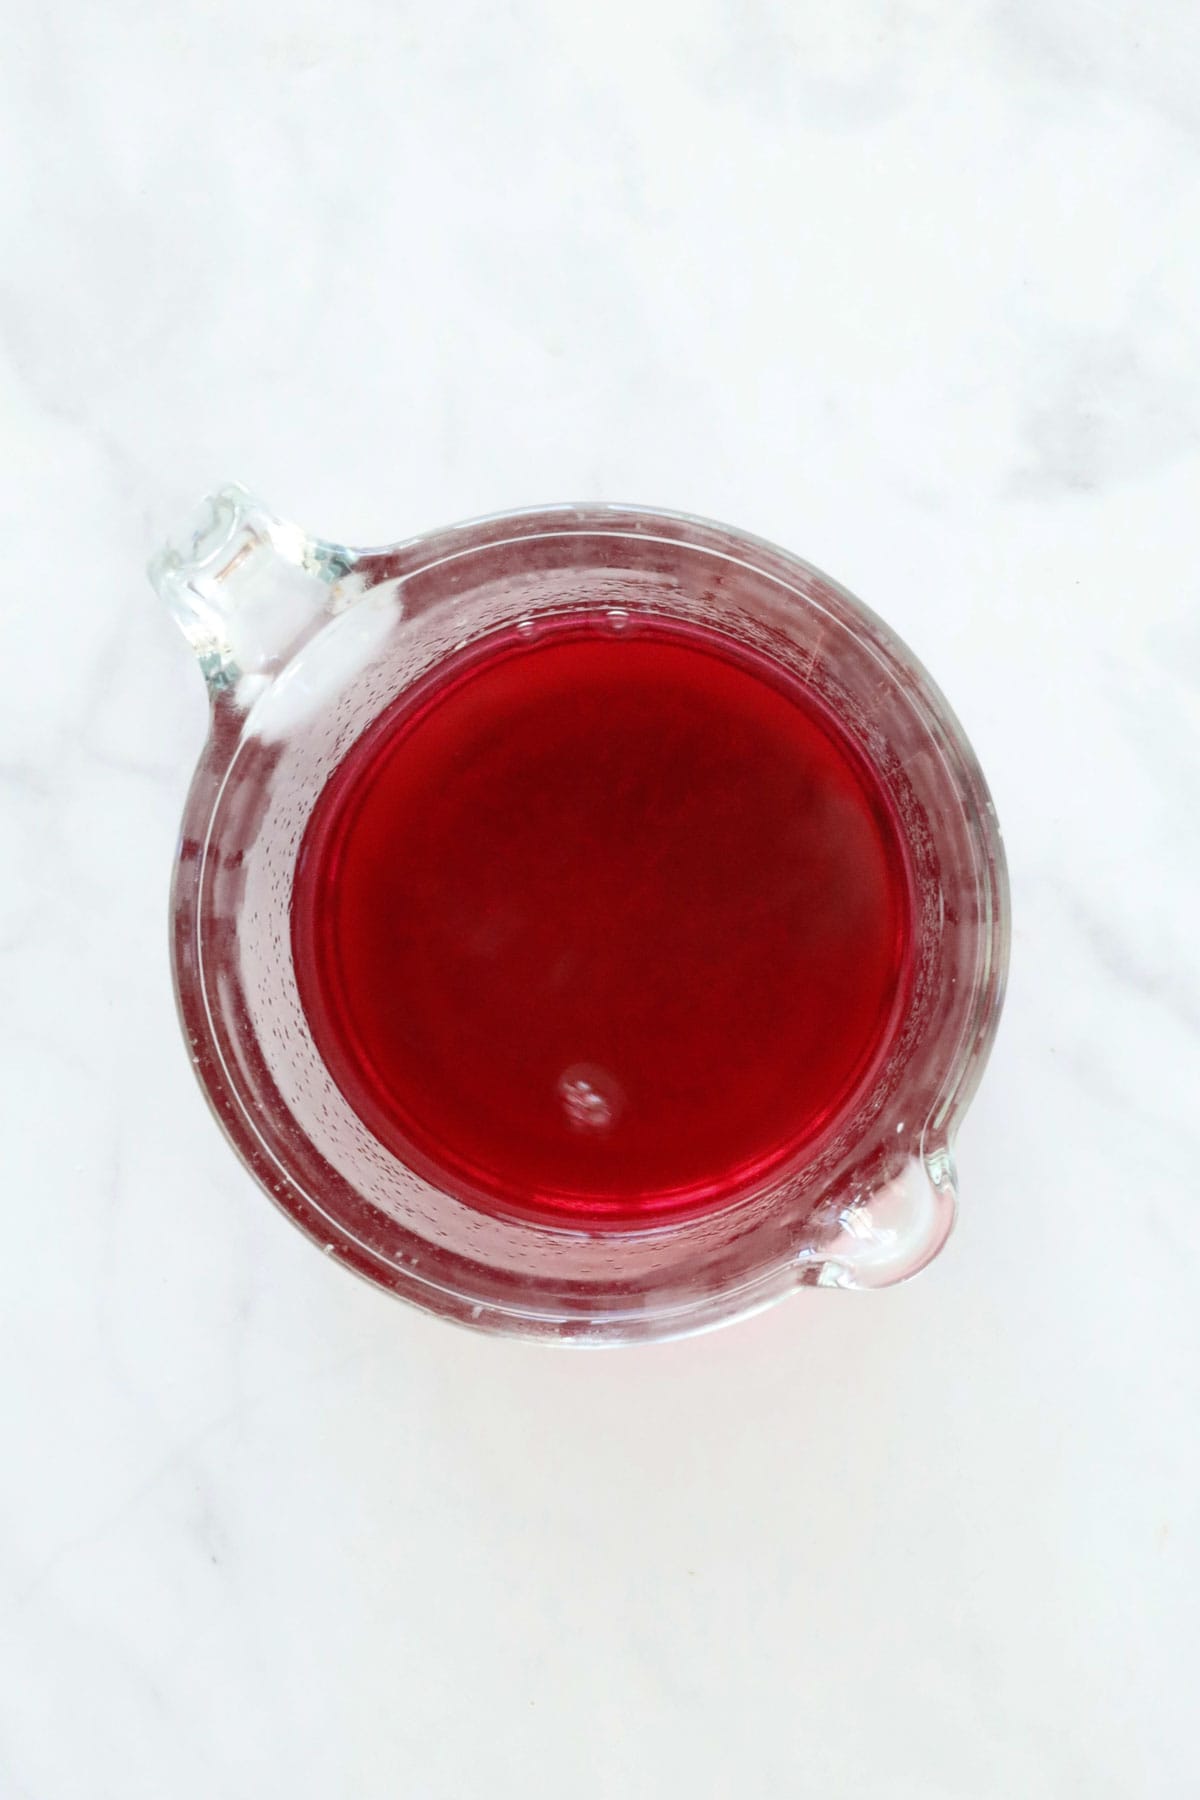 Raspberry jelly in a jug.